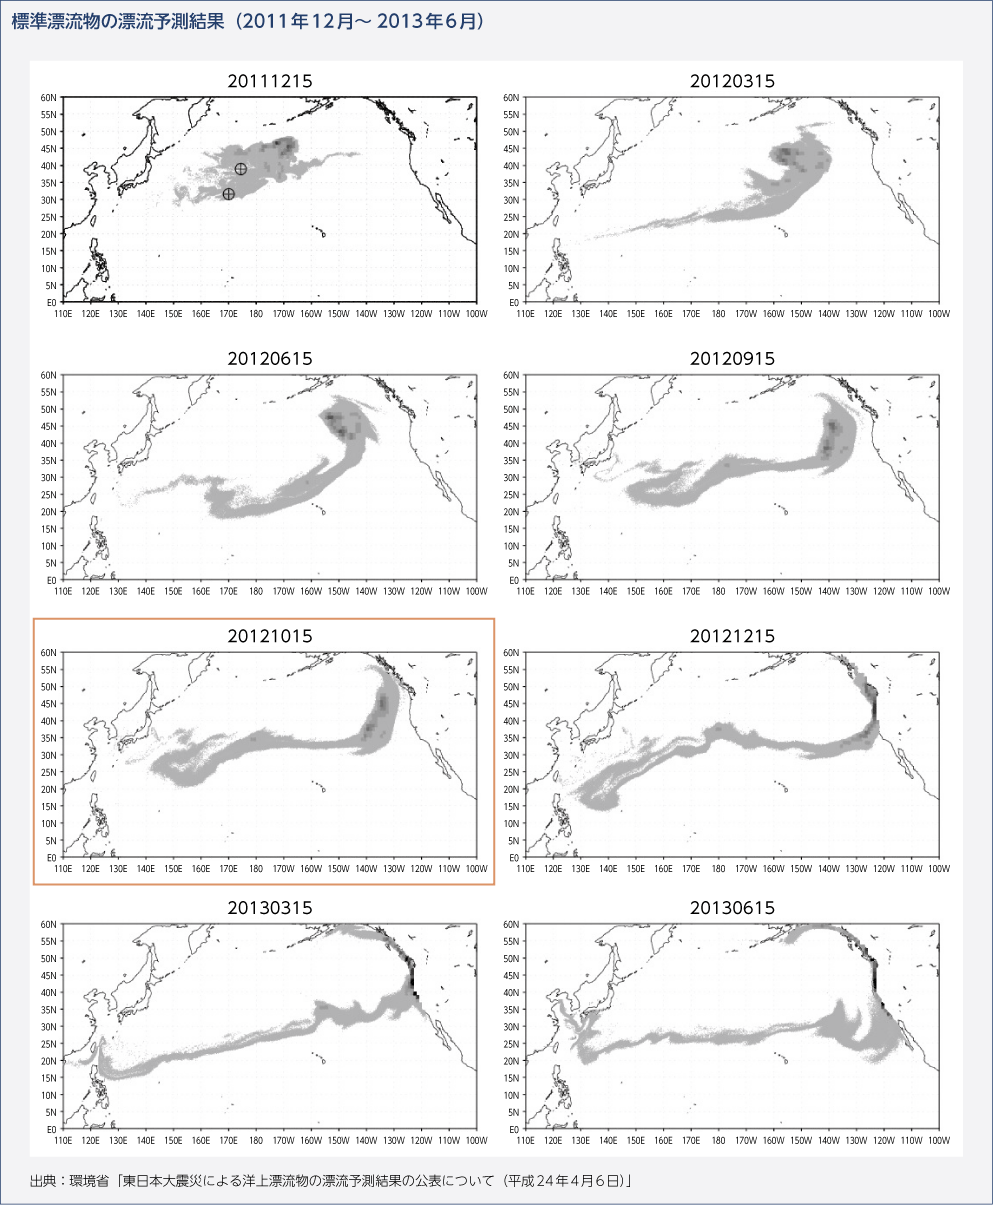 標準漂流物の漂流予測結果（2011年12月～2013年6月）